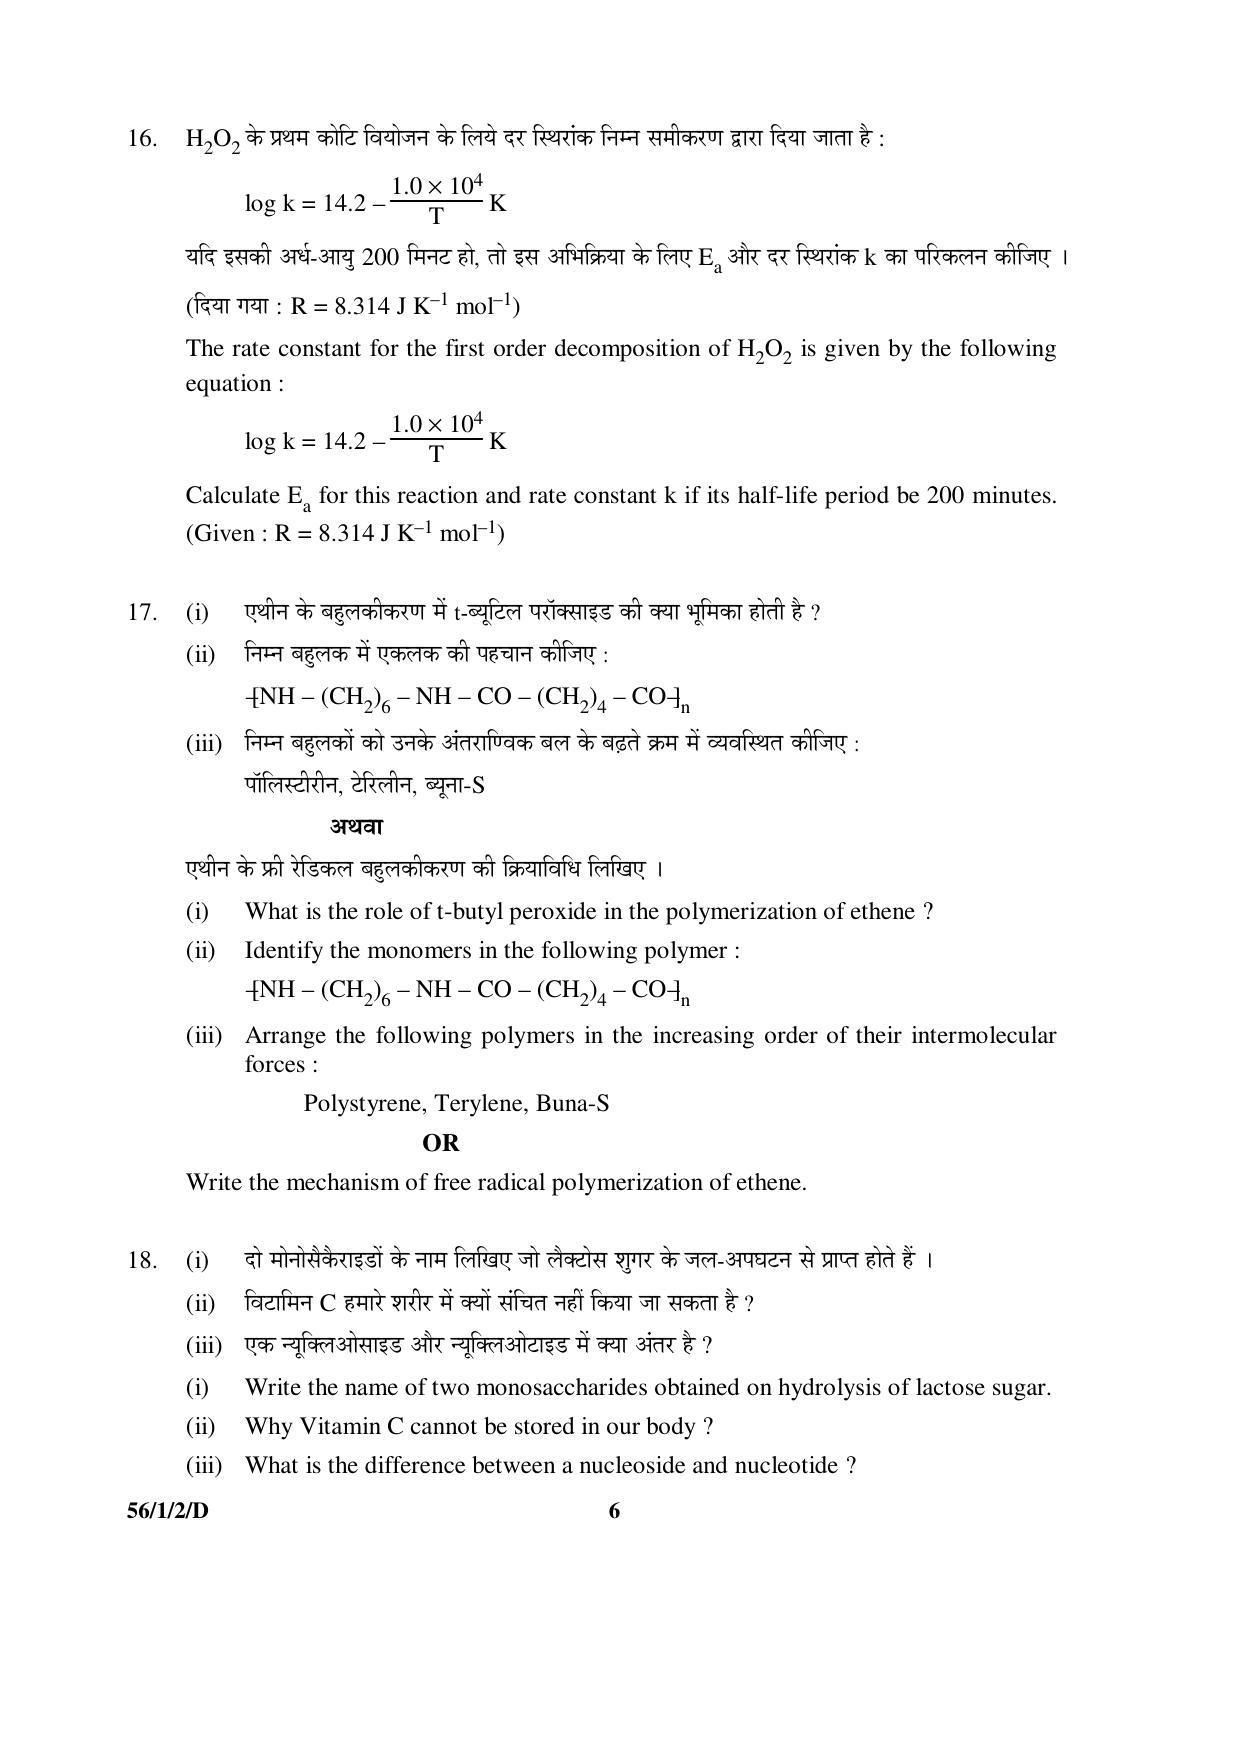 CBSE Class 12 56-1-2-D CHEMISTRY 2016 Question Paper - Page 6